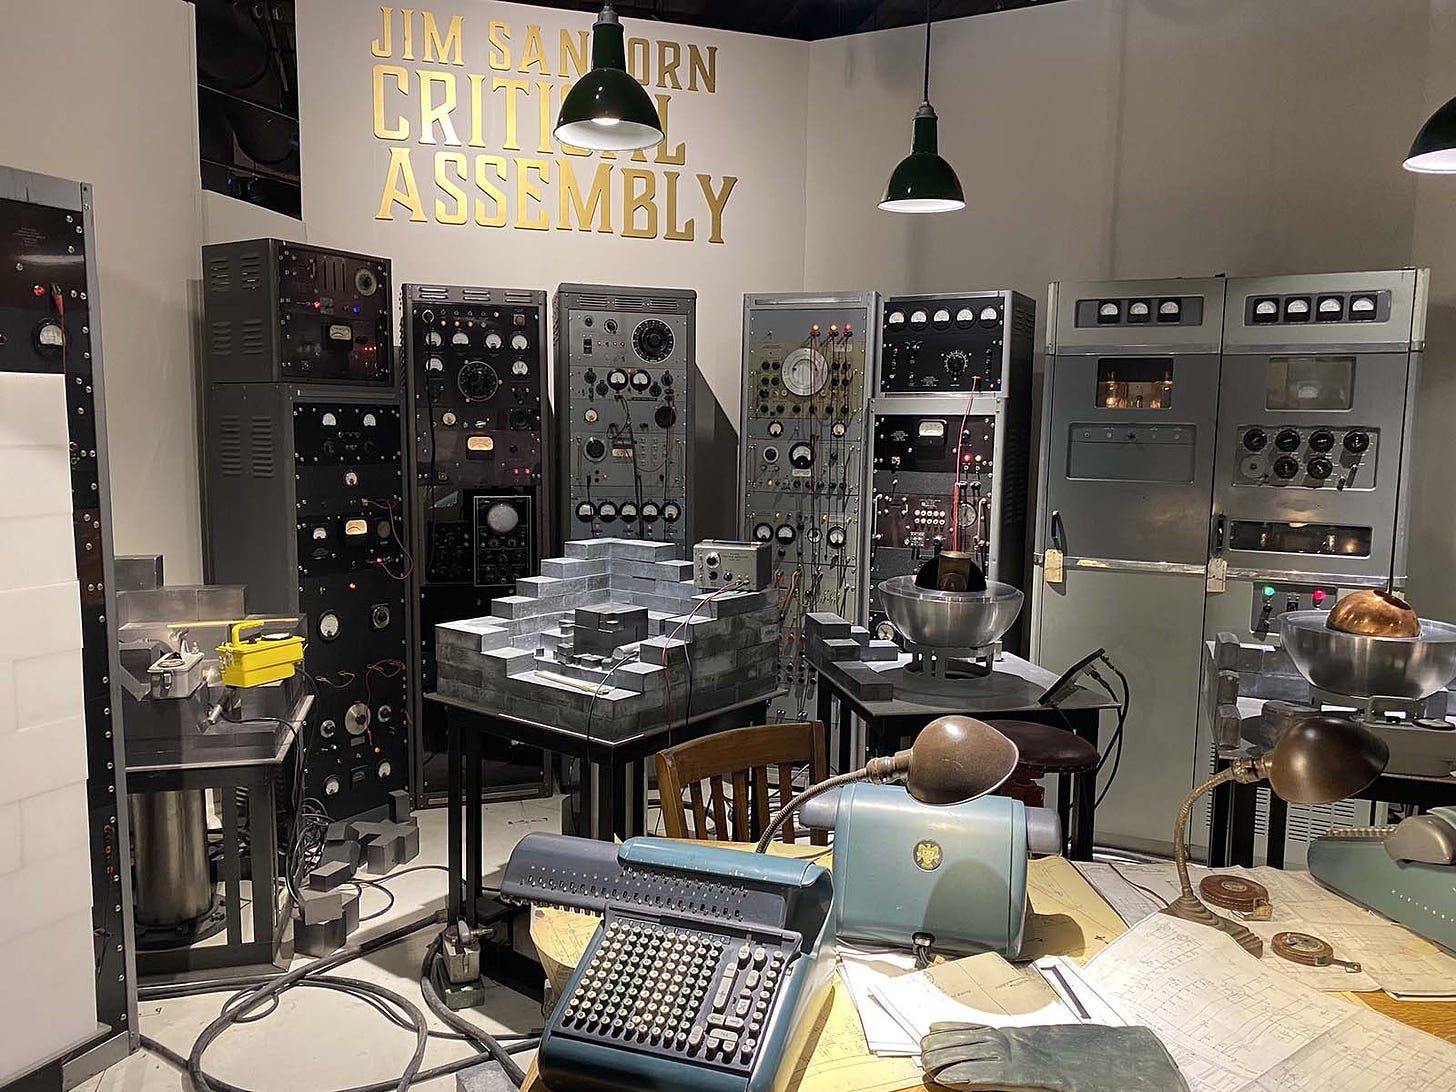 A room full of 1940s laboratory equipment.